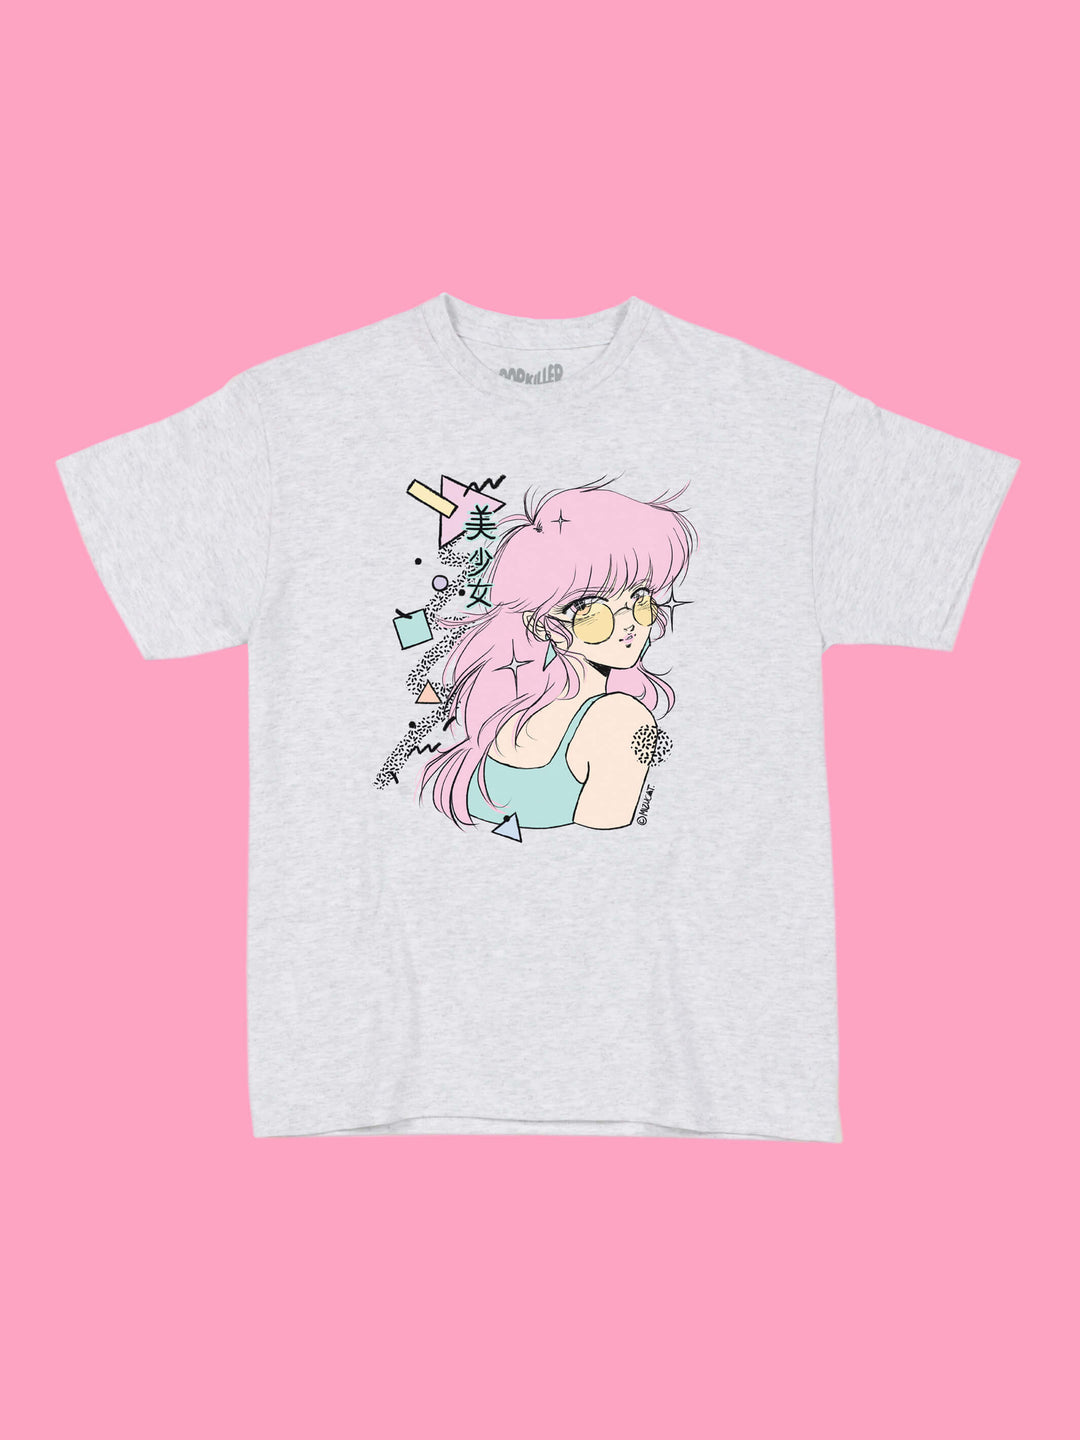 Pink kawaii shoujo anime t-shirt.